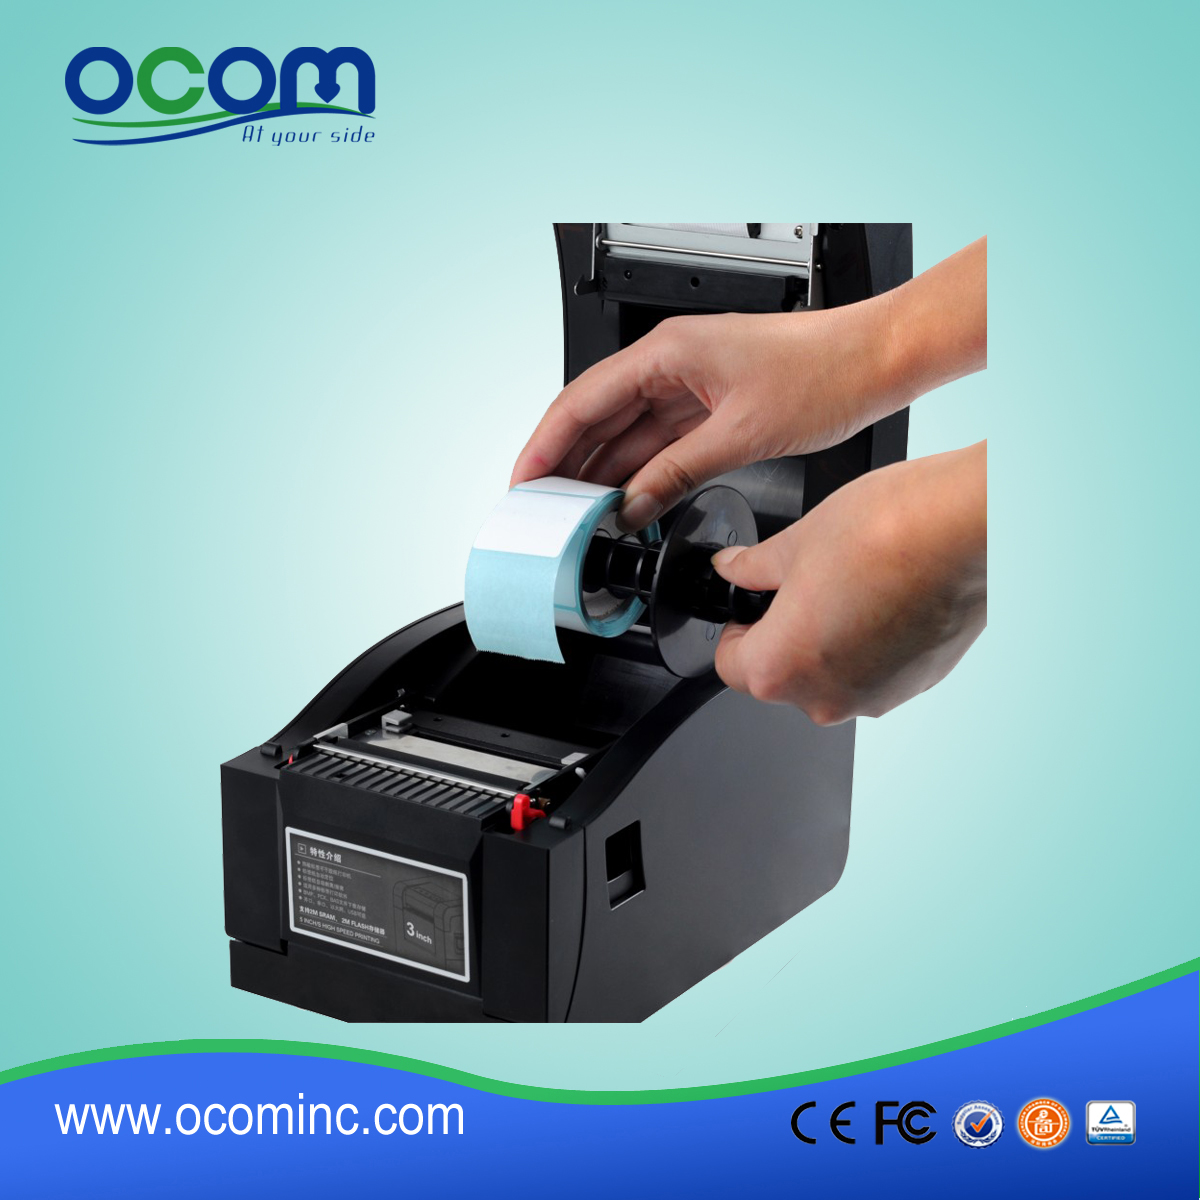 OCBP-005: Costo impresora de etiquetas de código de barras térmica directa Airprint Competitiva